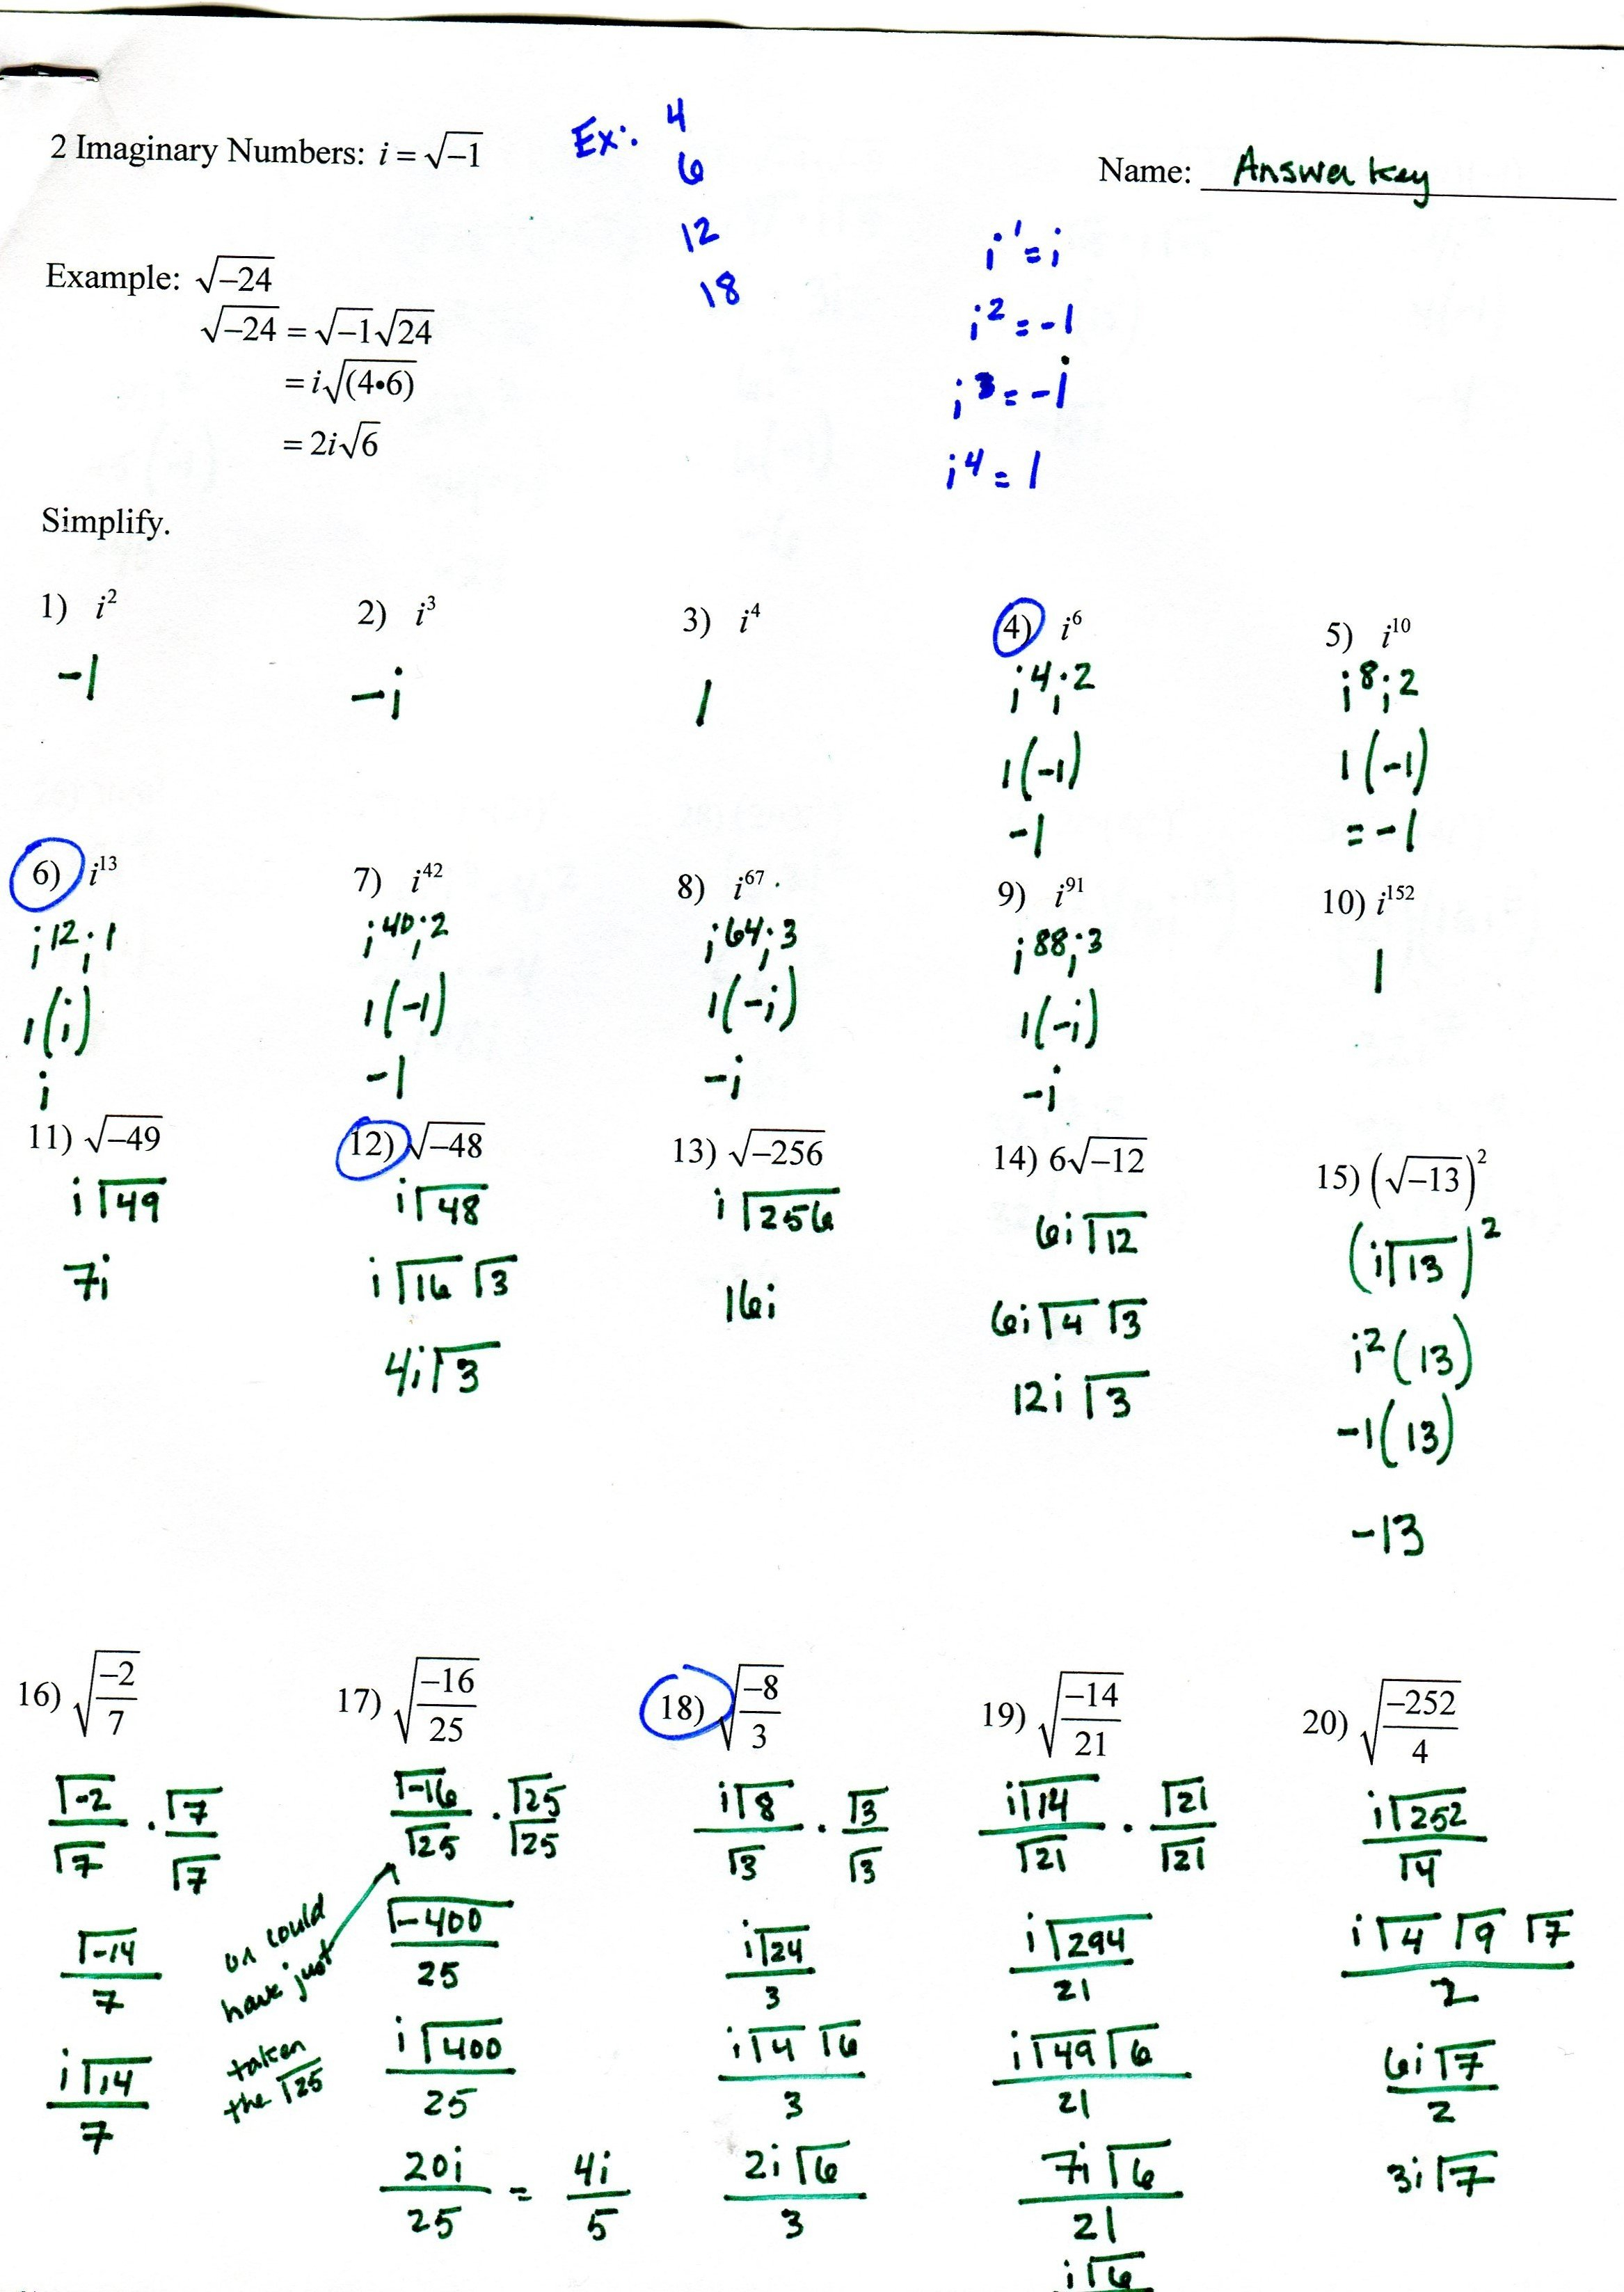 Extended Algebra 1 Functions Worksheet 4 Answers Lovely Enchanting Regarding Extended Algebra 1 Functions Worksheet 4 Answers